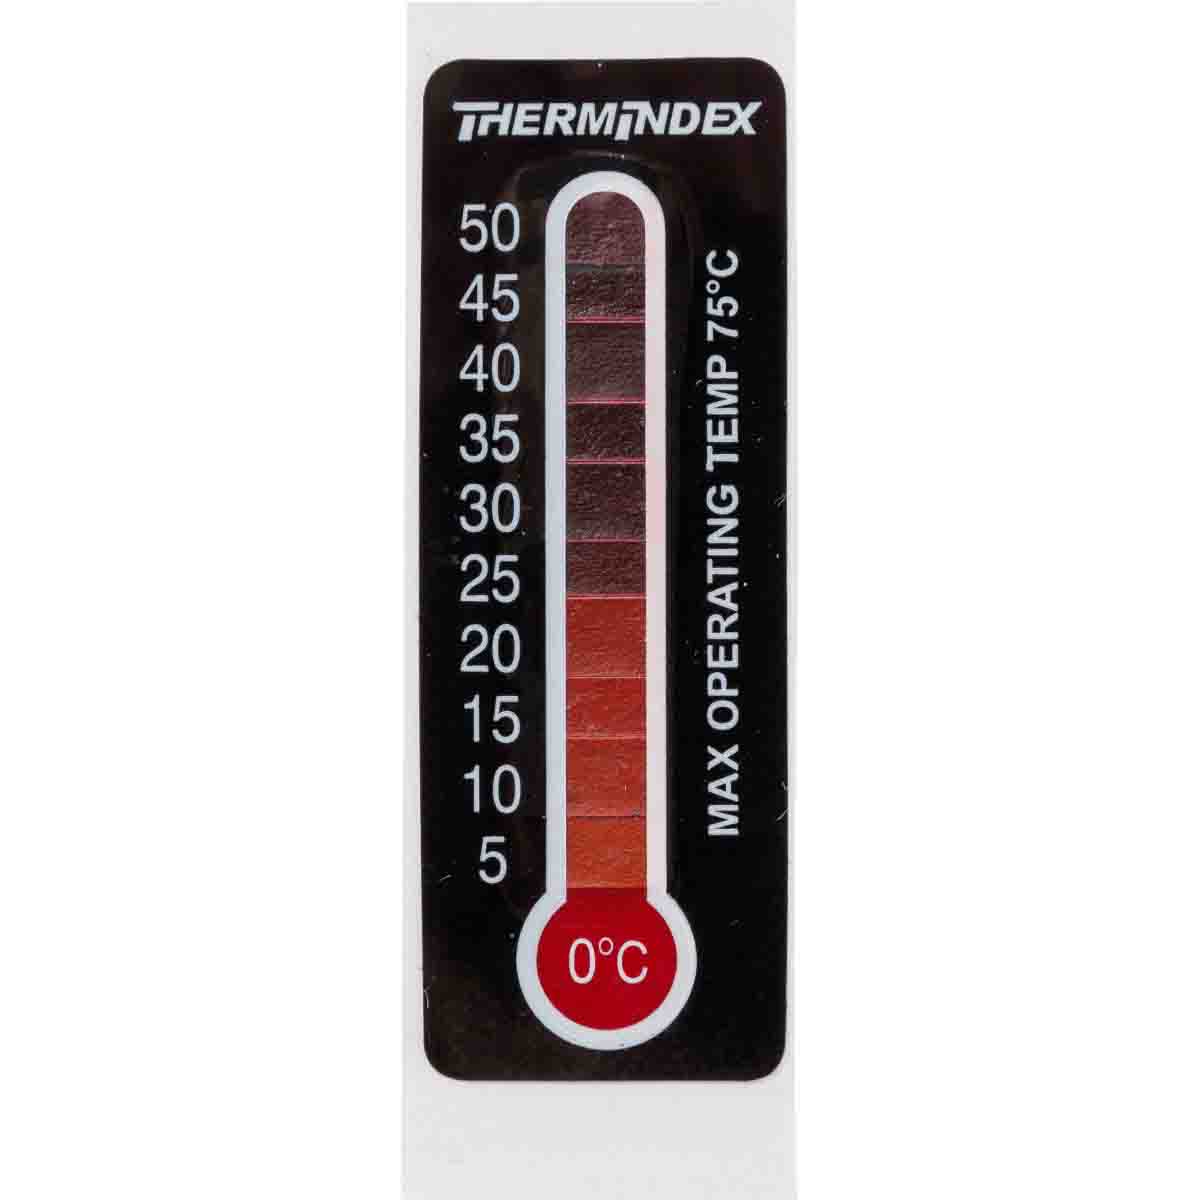 BRADY Reversible, temperaturanzeigende Etiketten - 11 Temperatur-Messstufen TIL-7-0C-50C 195837